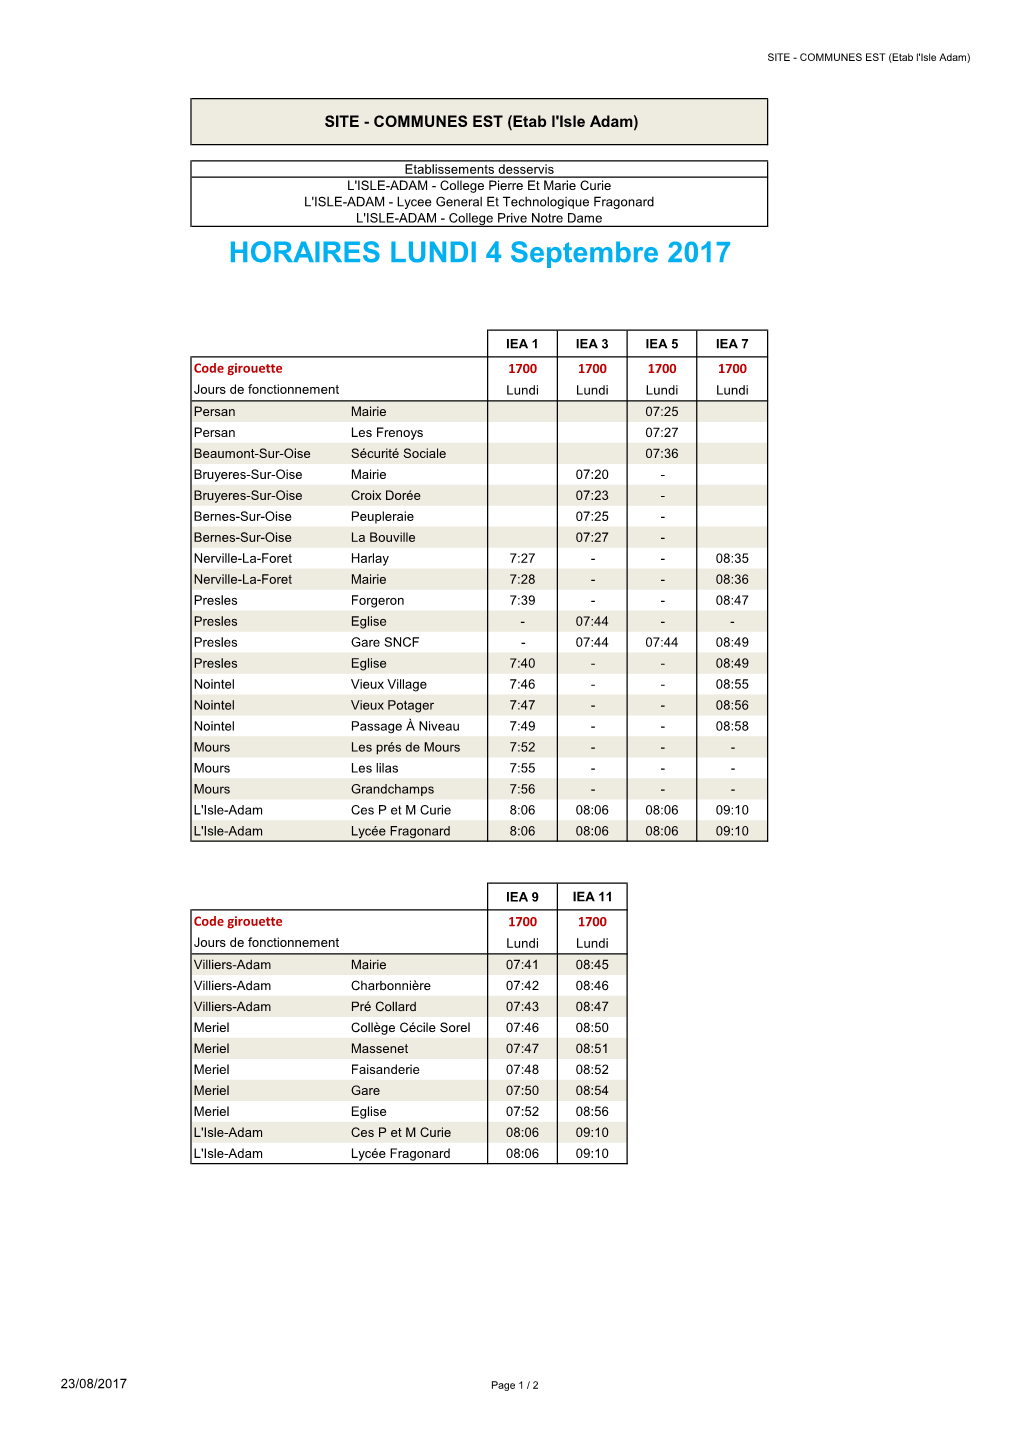 HORAIRES LUNDI 4 Septembre 2017